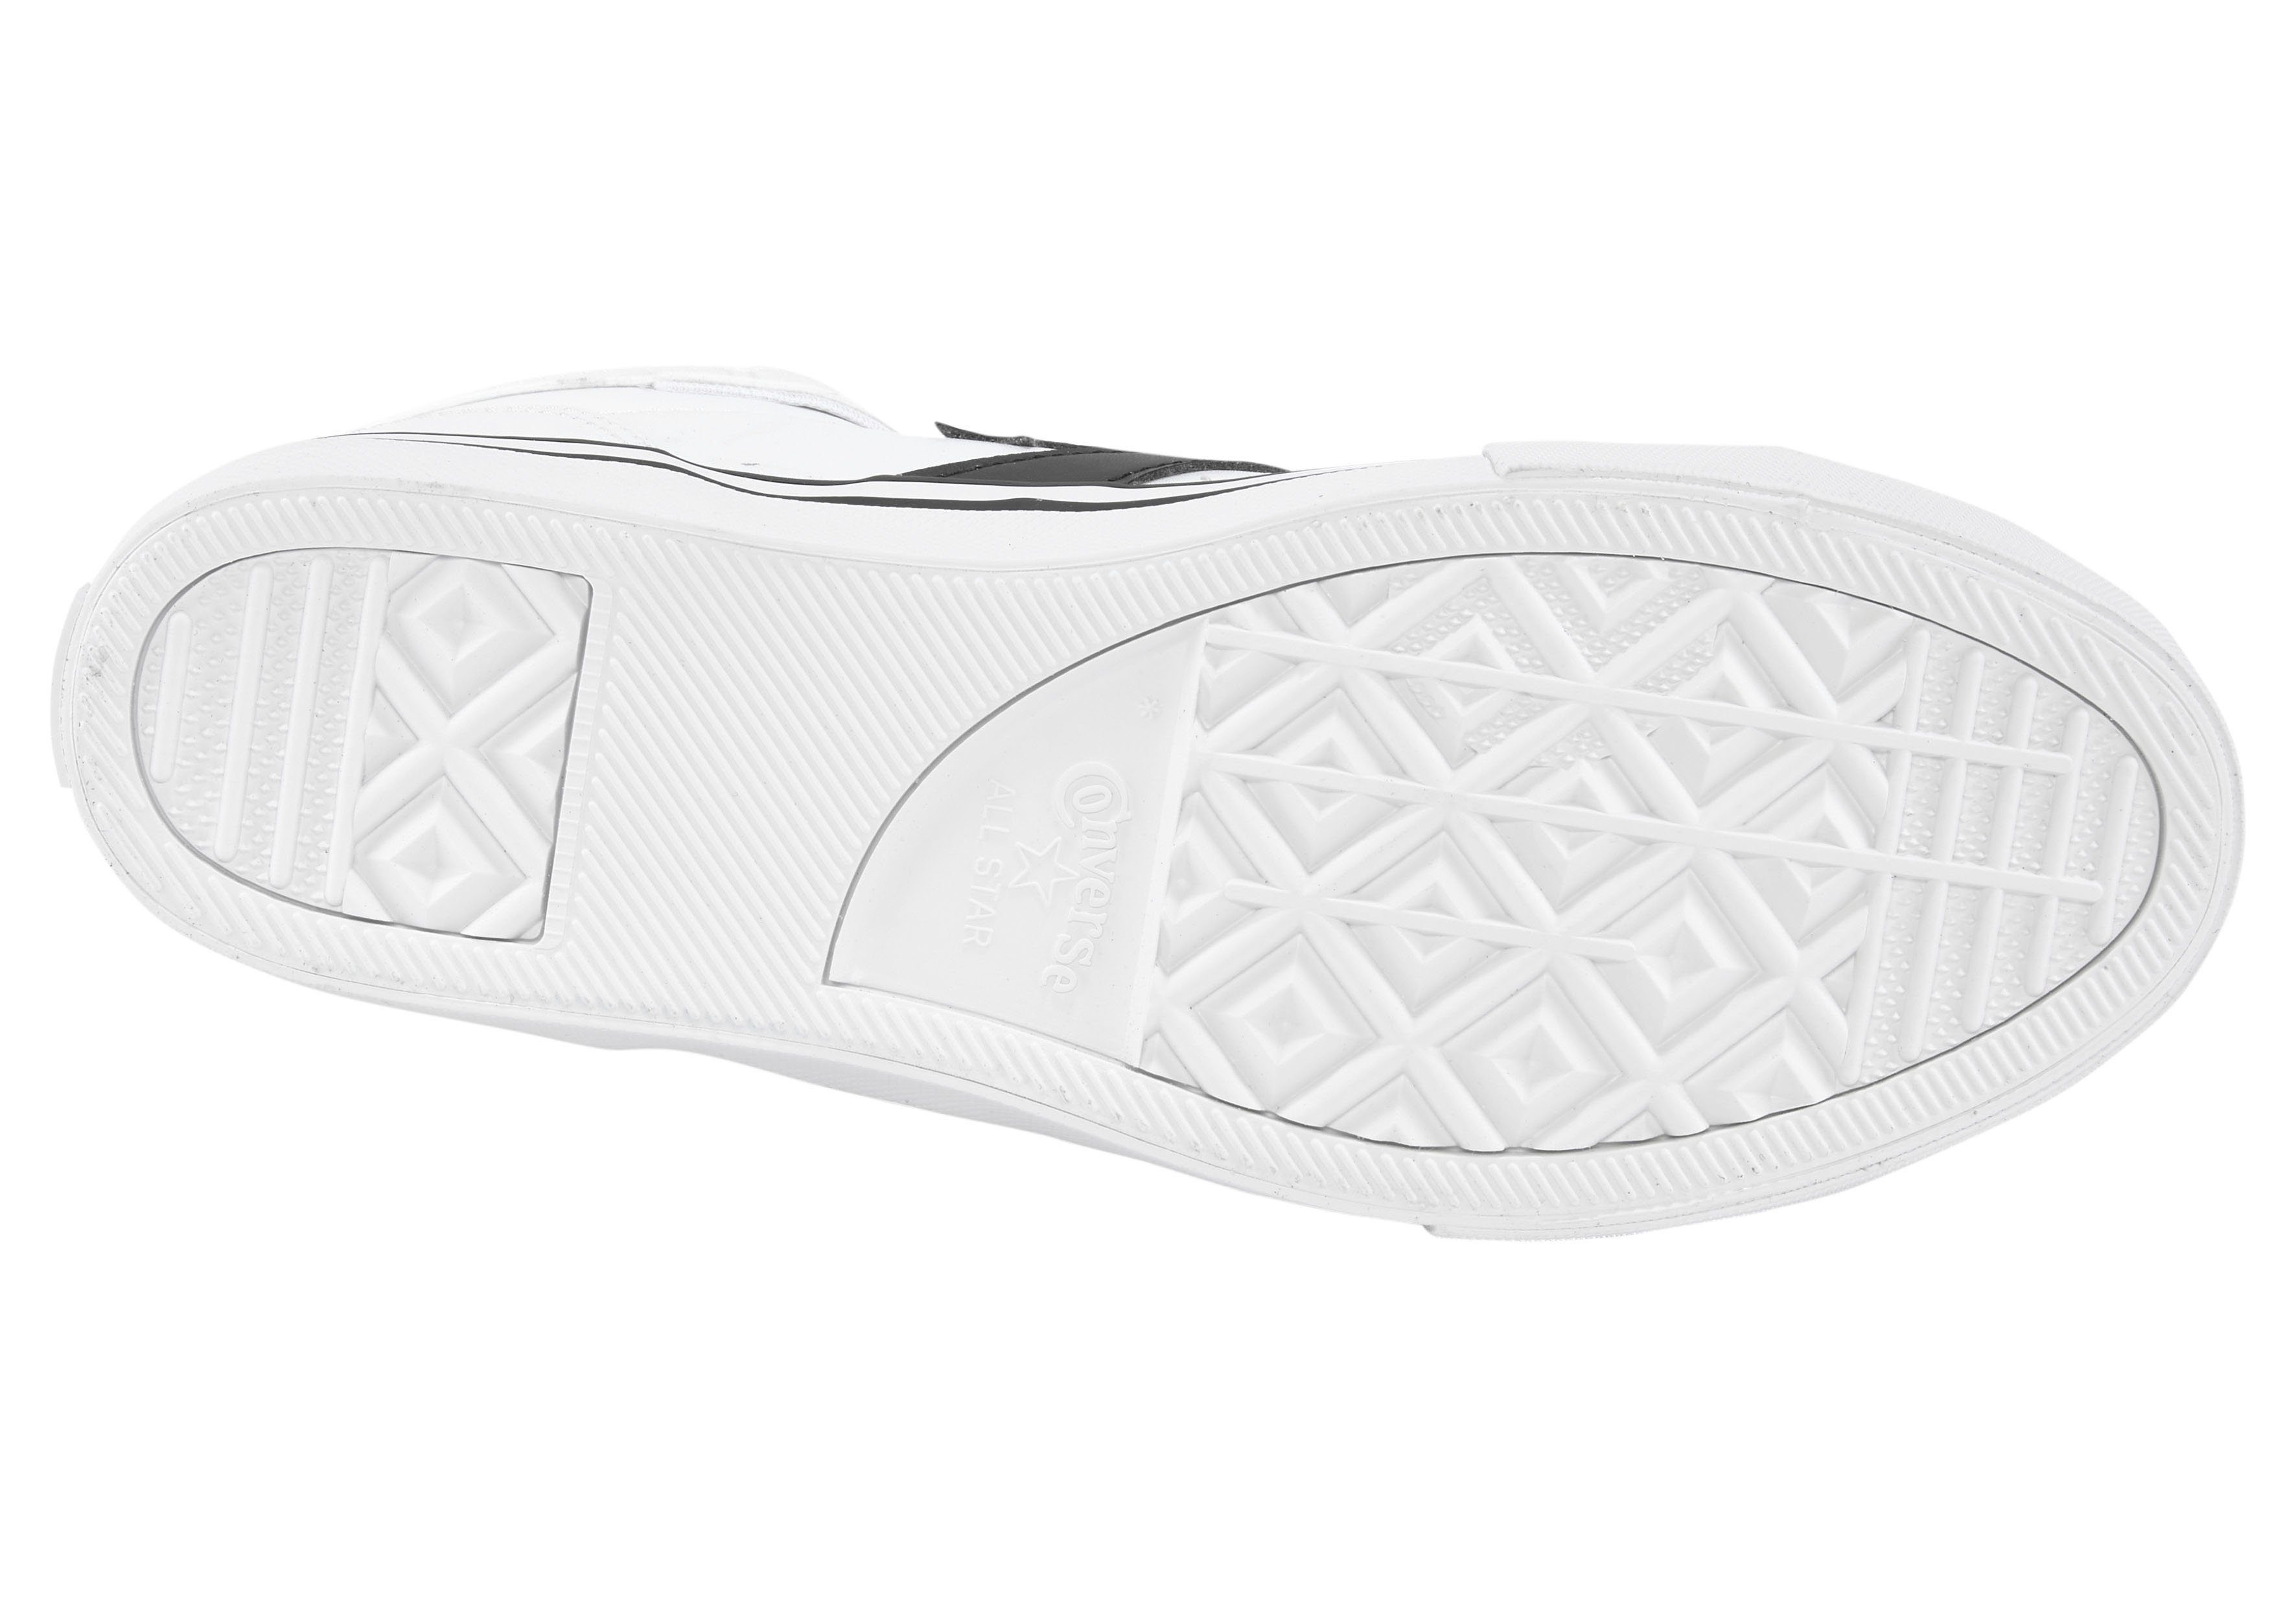 BLAZE weiß-schwarz LEATHER Converse Sneaker STRAP PRO